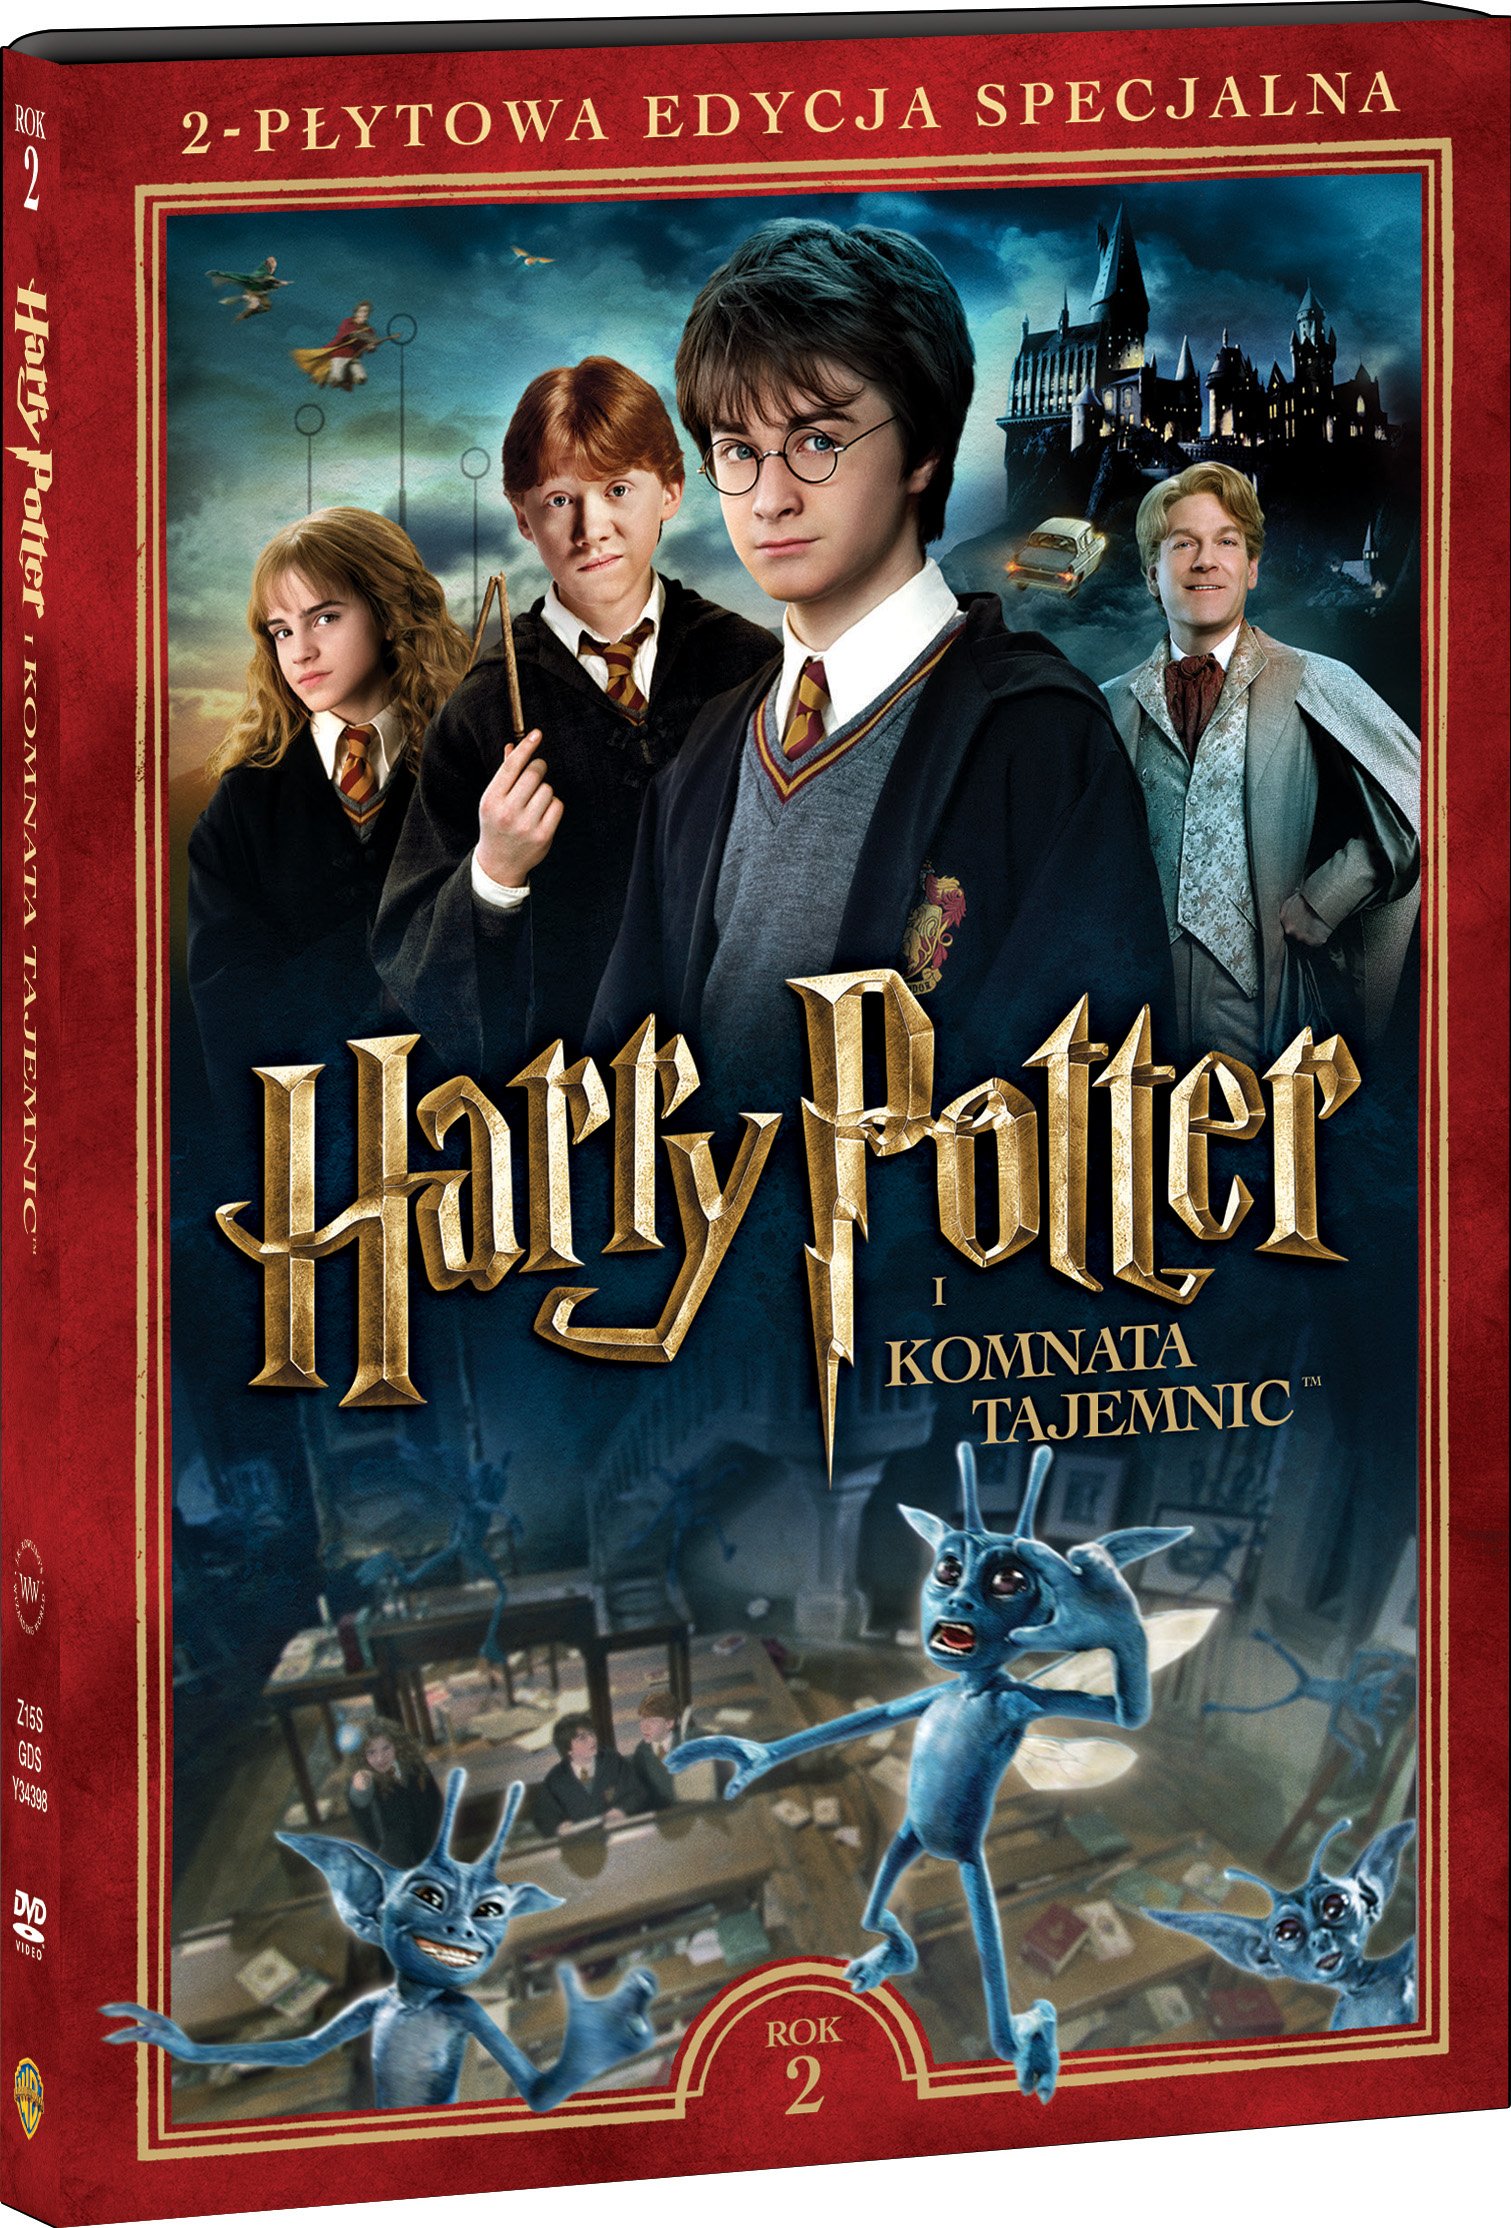 Harry potter i komnata tajemnic